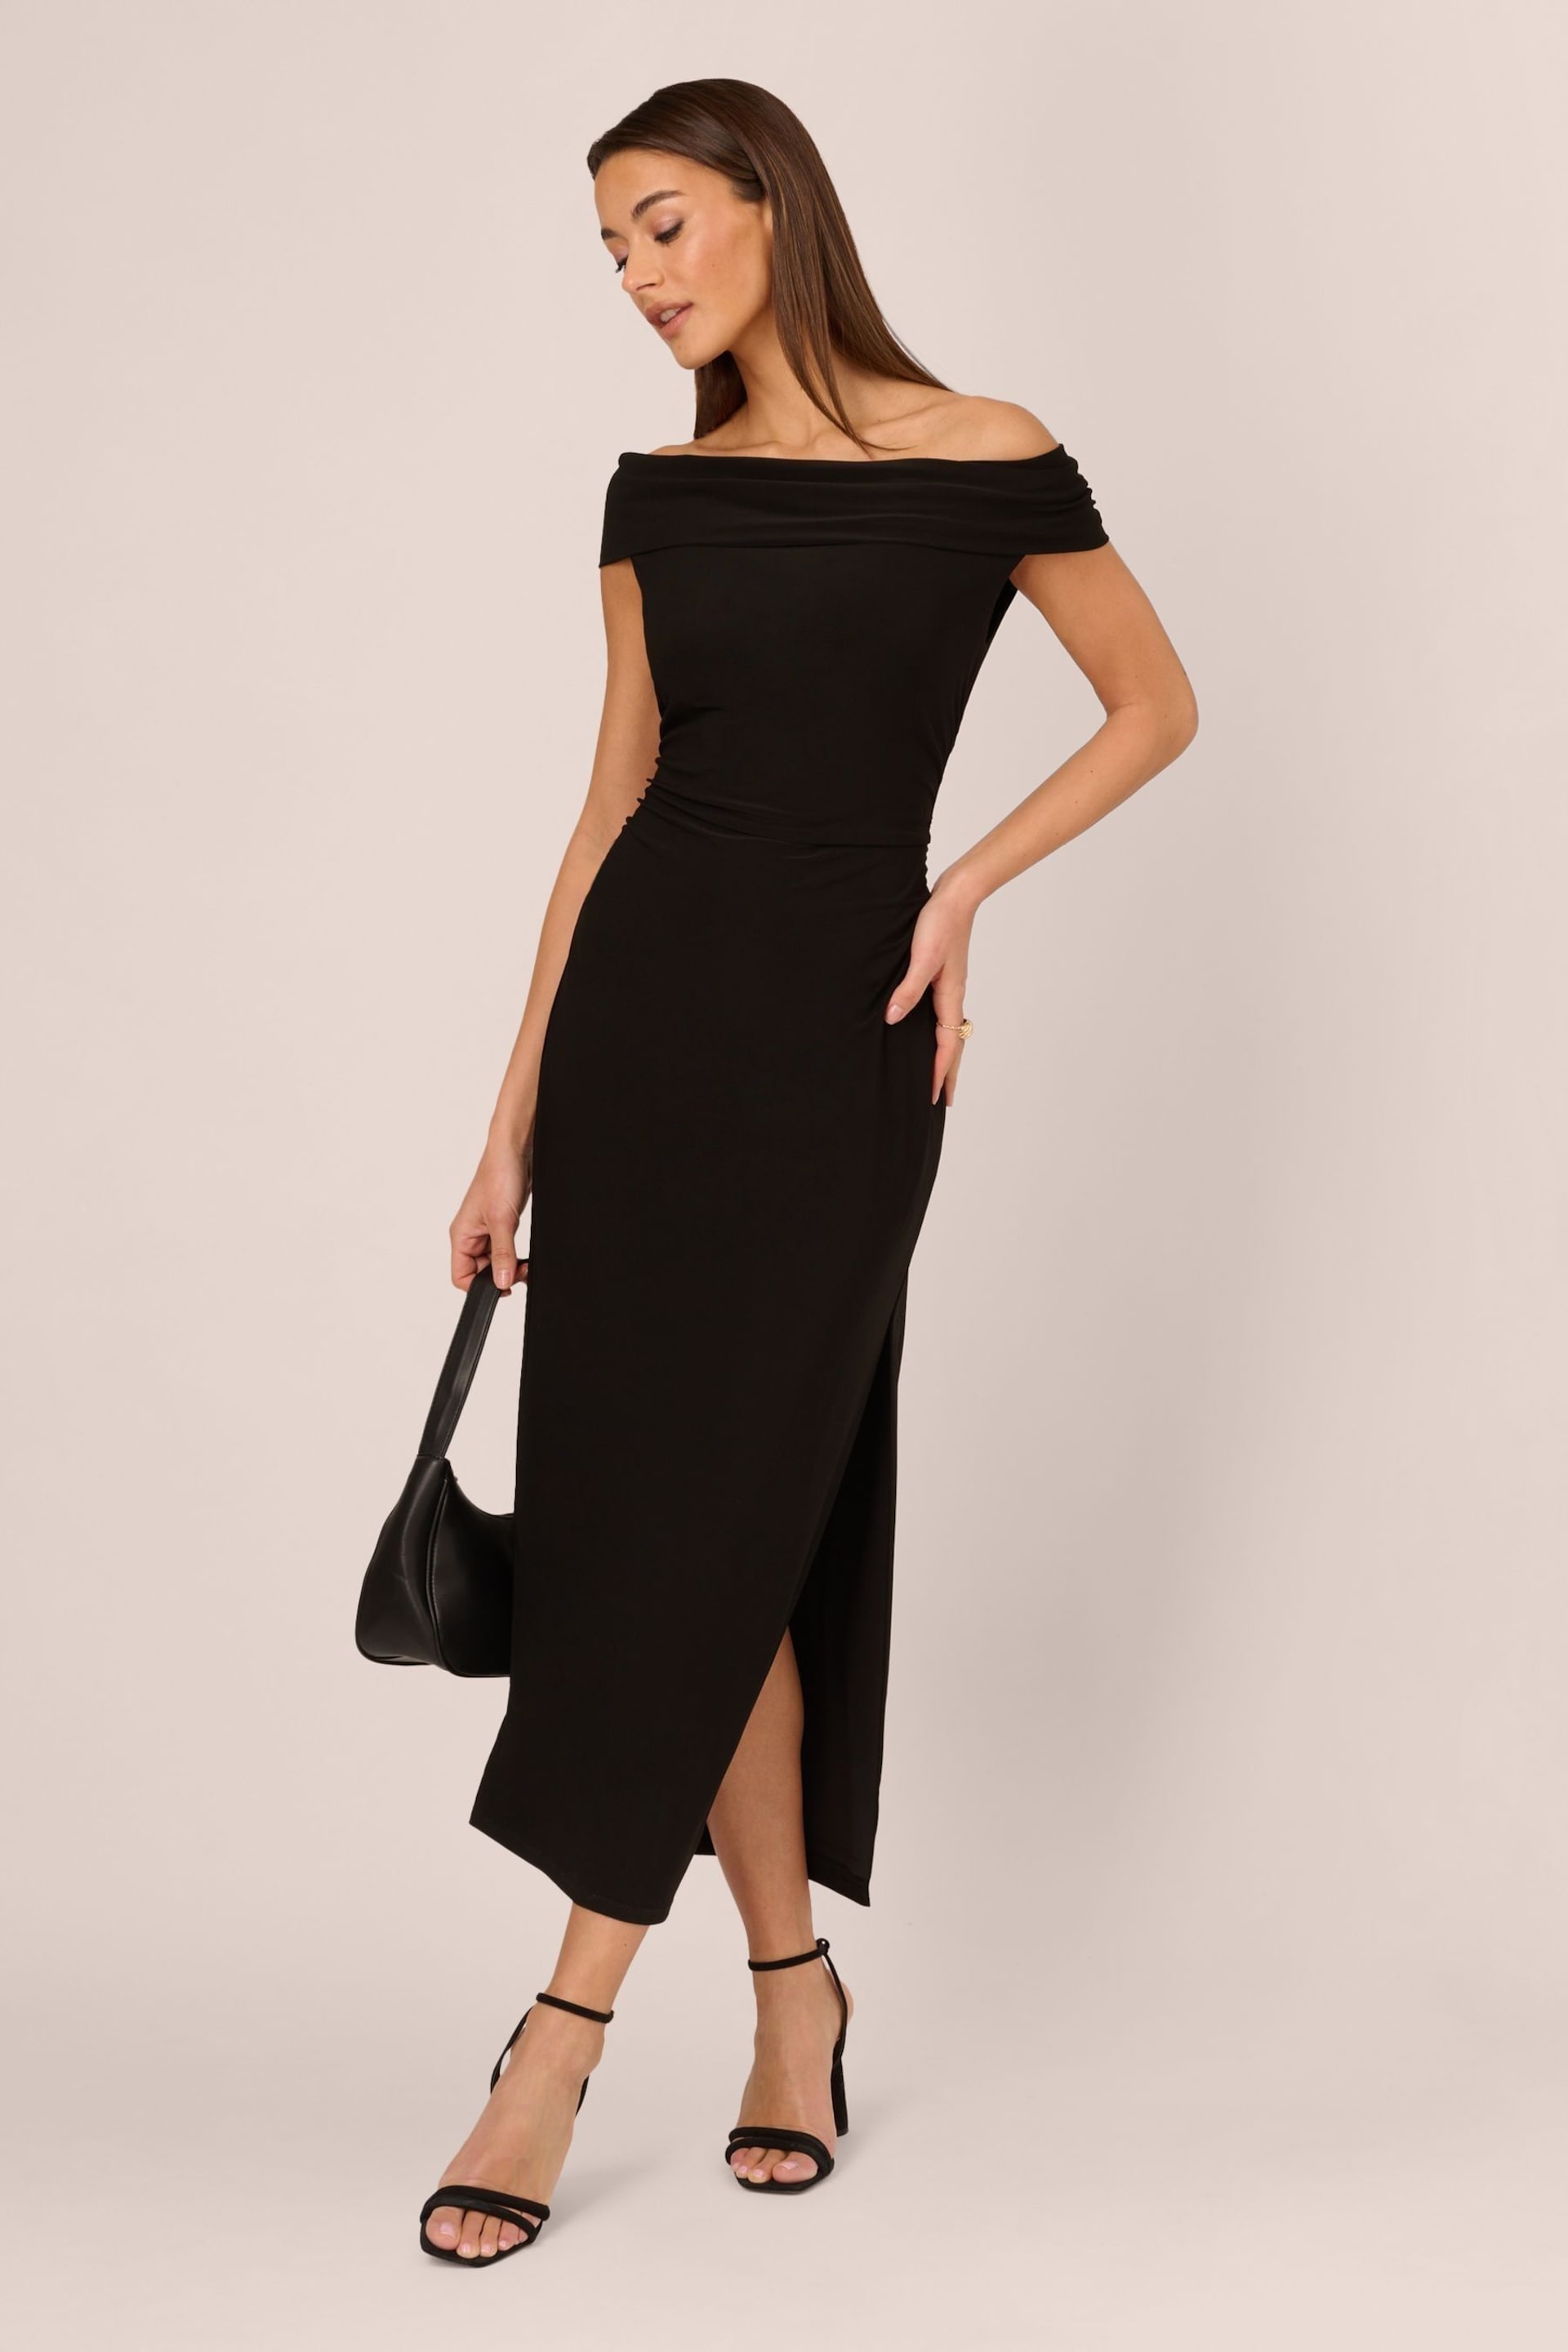 Adrianna Papell Matte Jersey Long Black Dress - Image 3 of 7